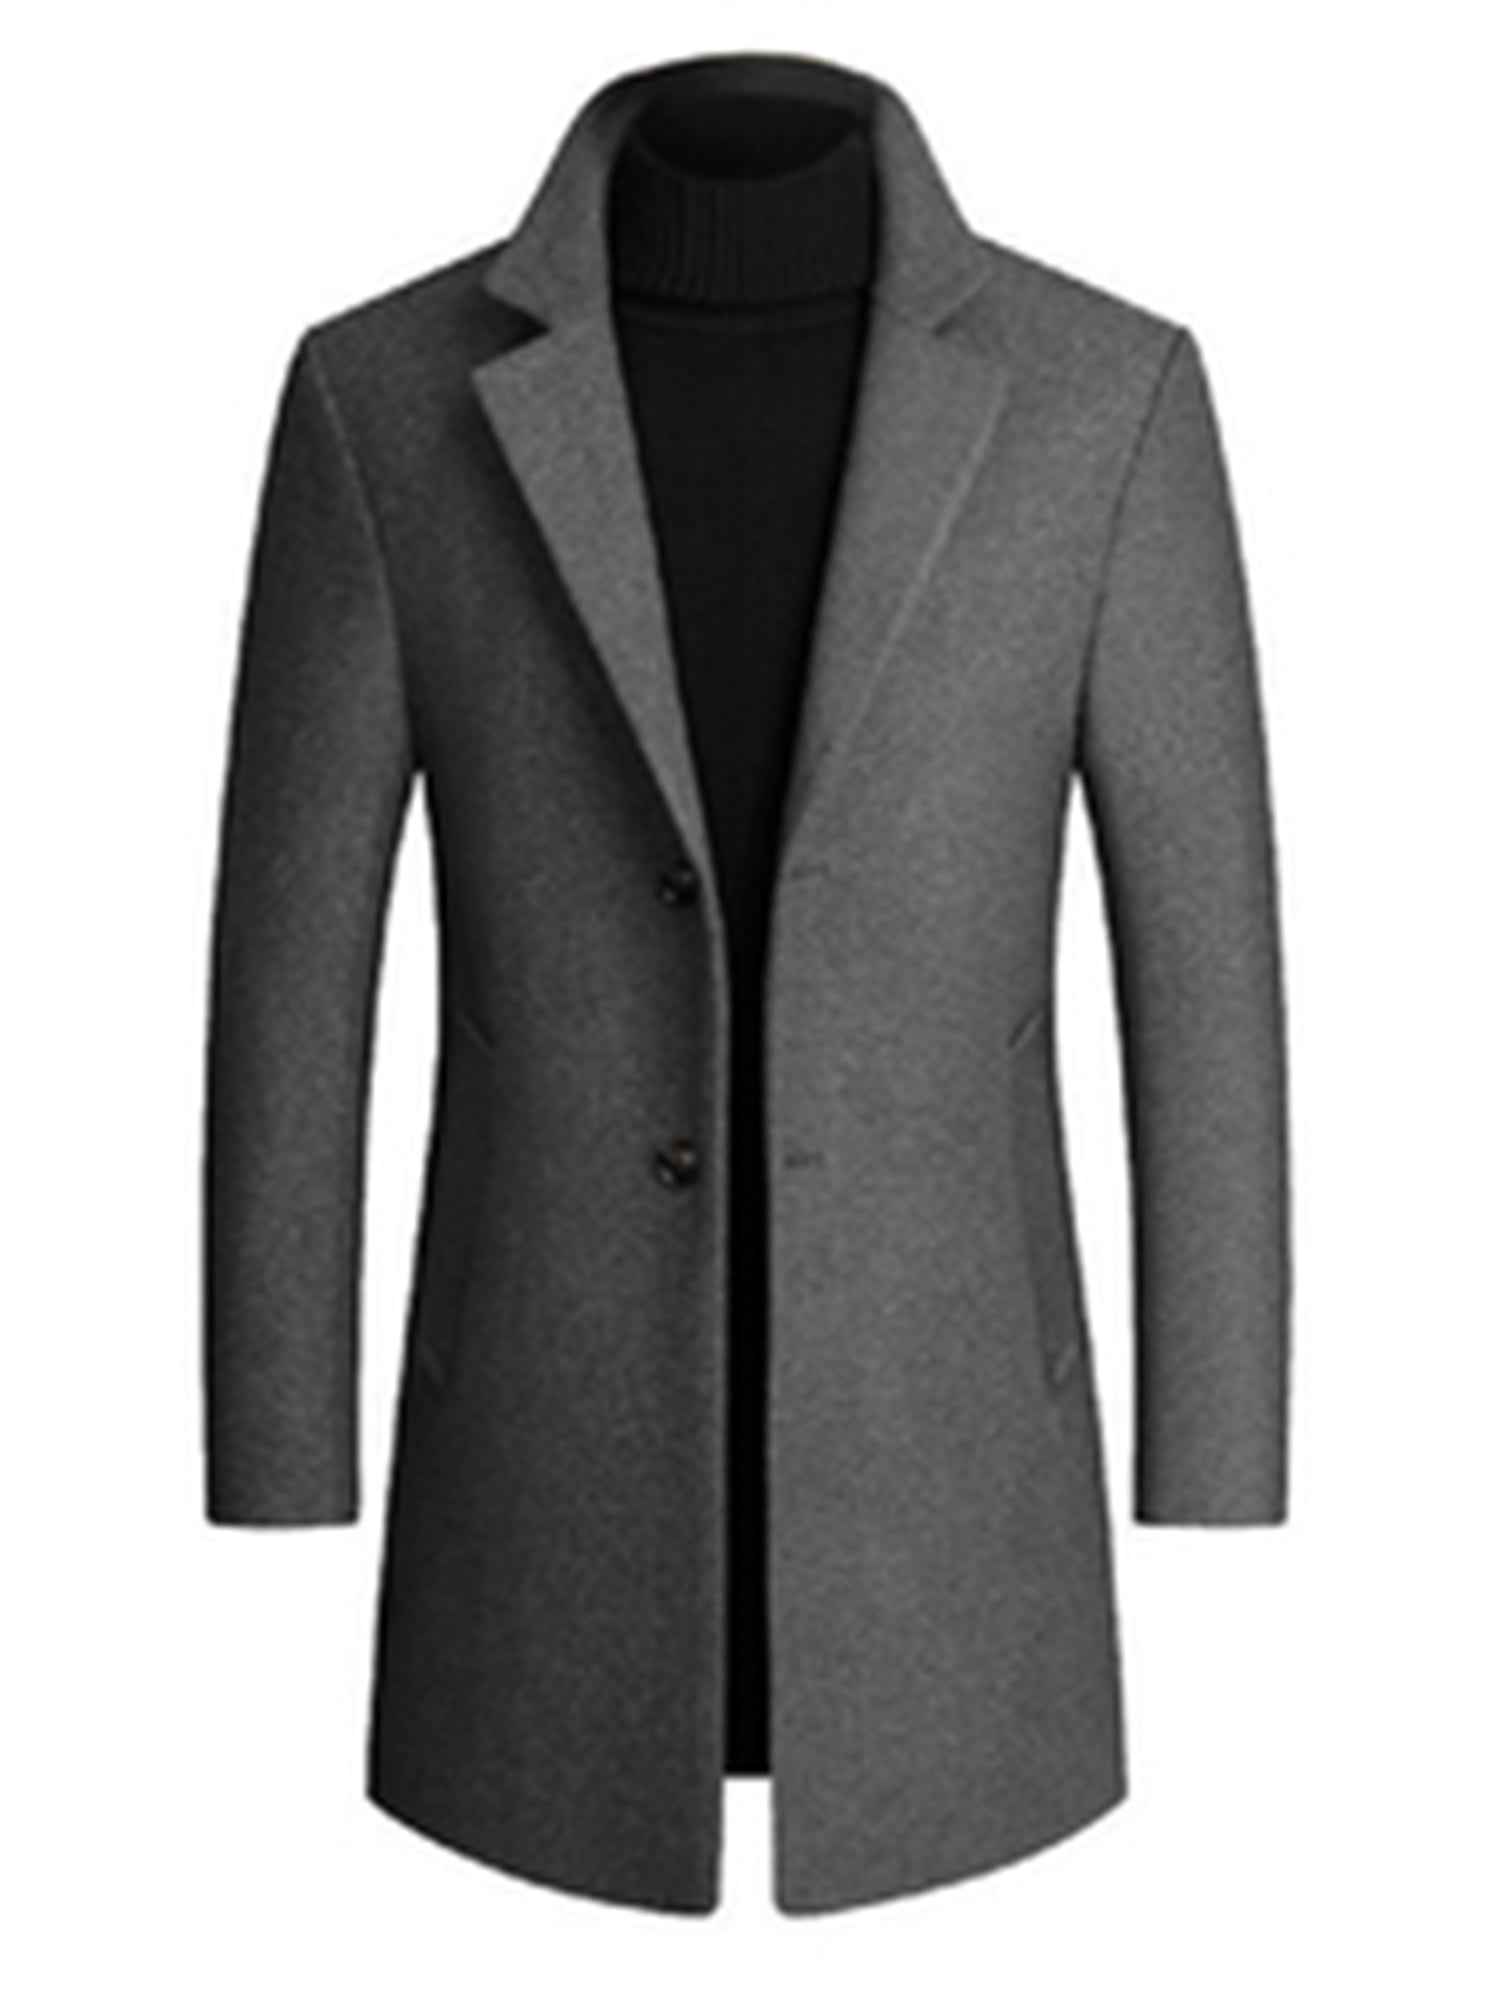 Yskkt Men's fashion autumn/winter woolen trench coat long British wool ...